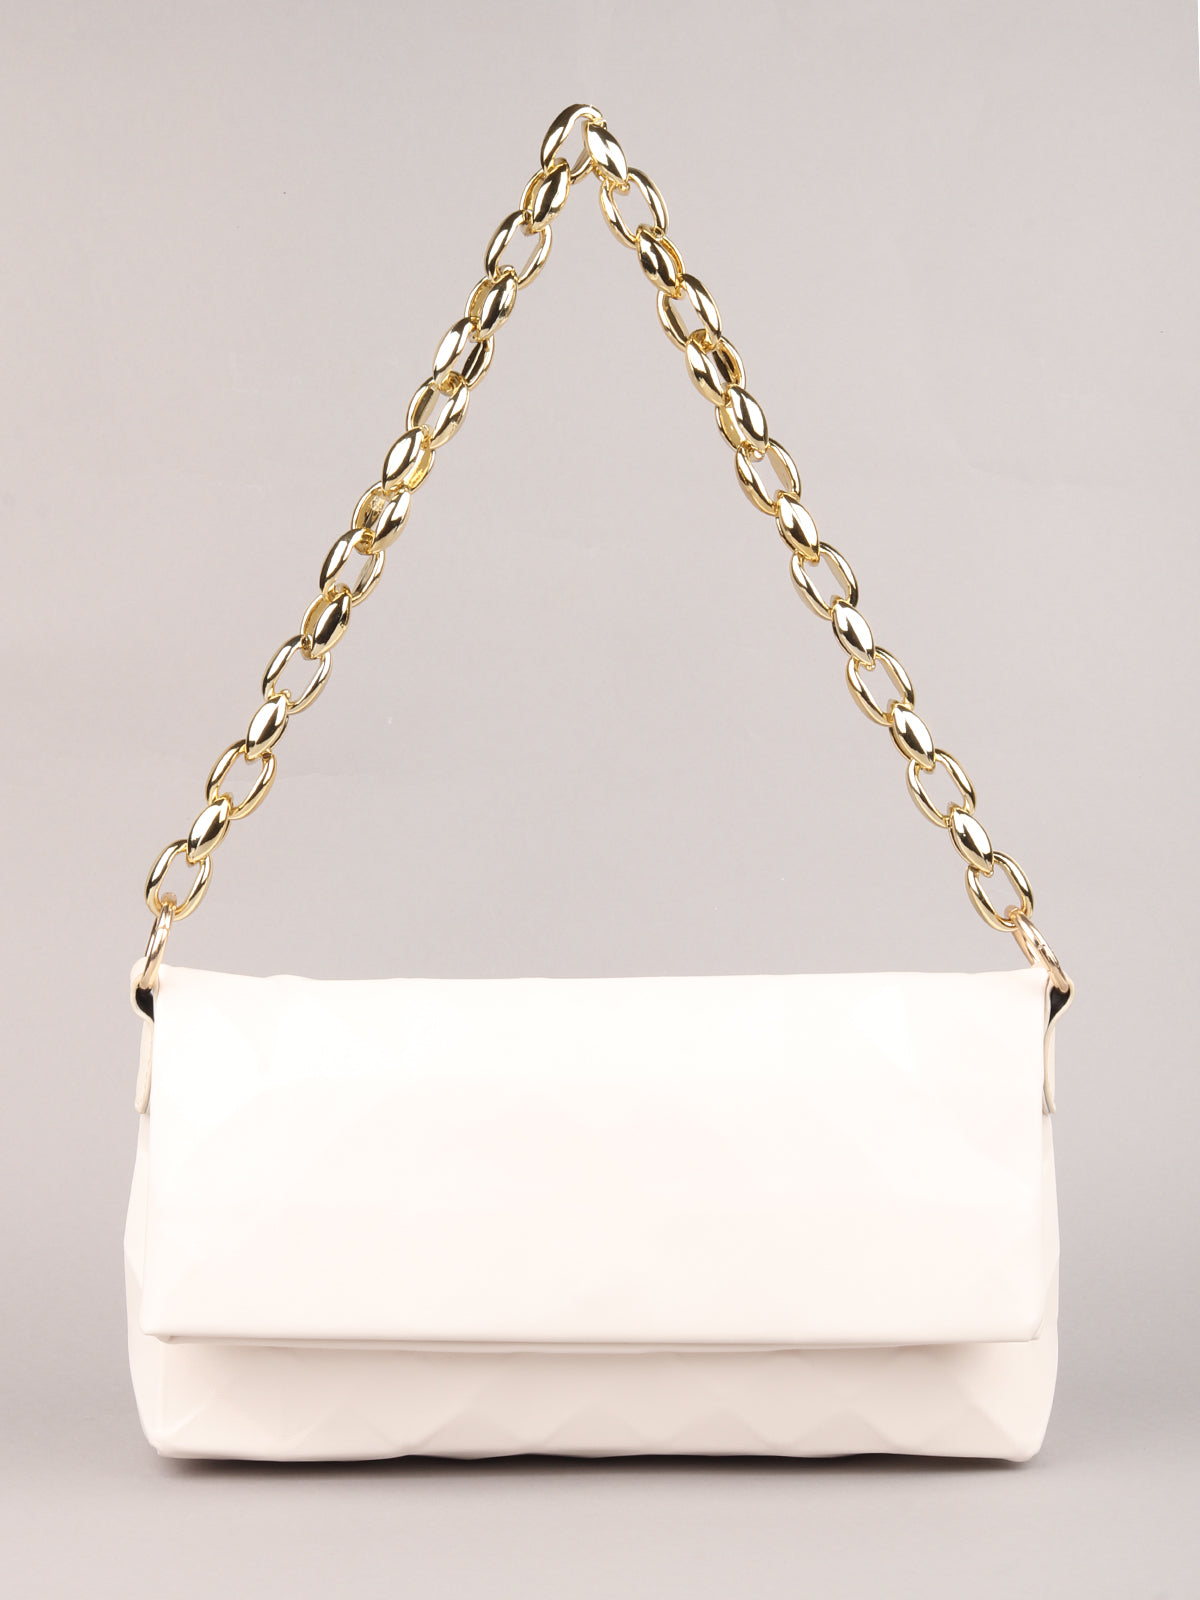 Odette White Patterned Clutch Bag For Women